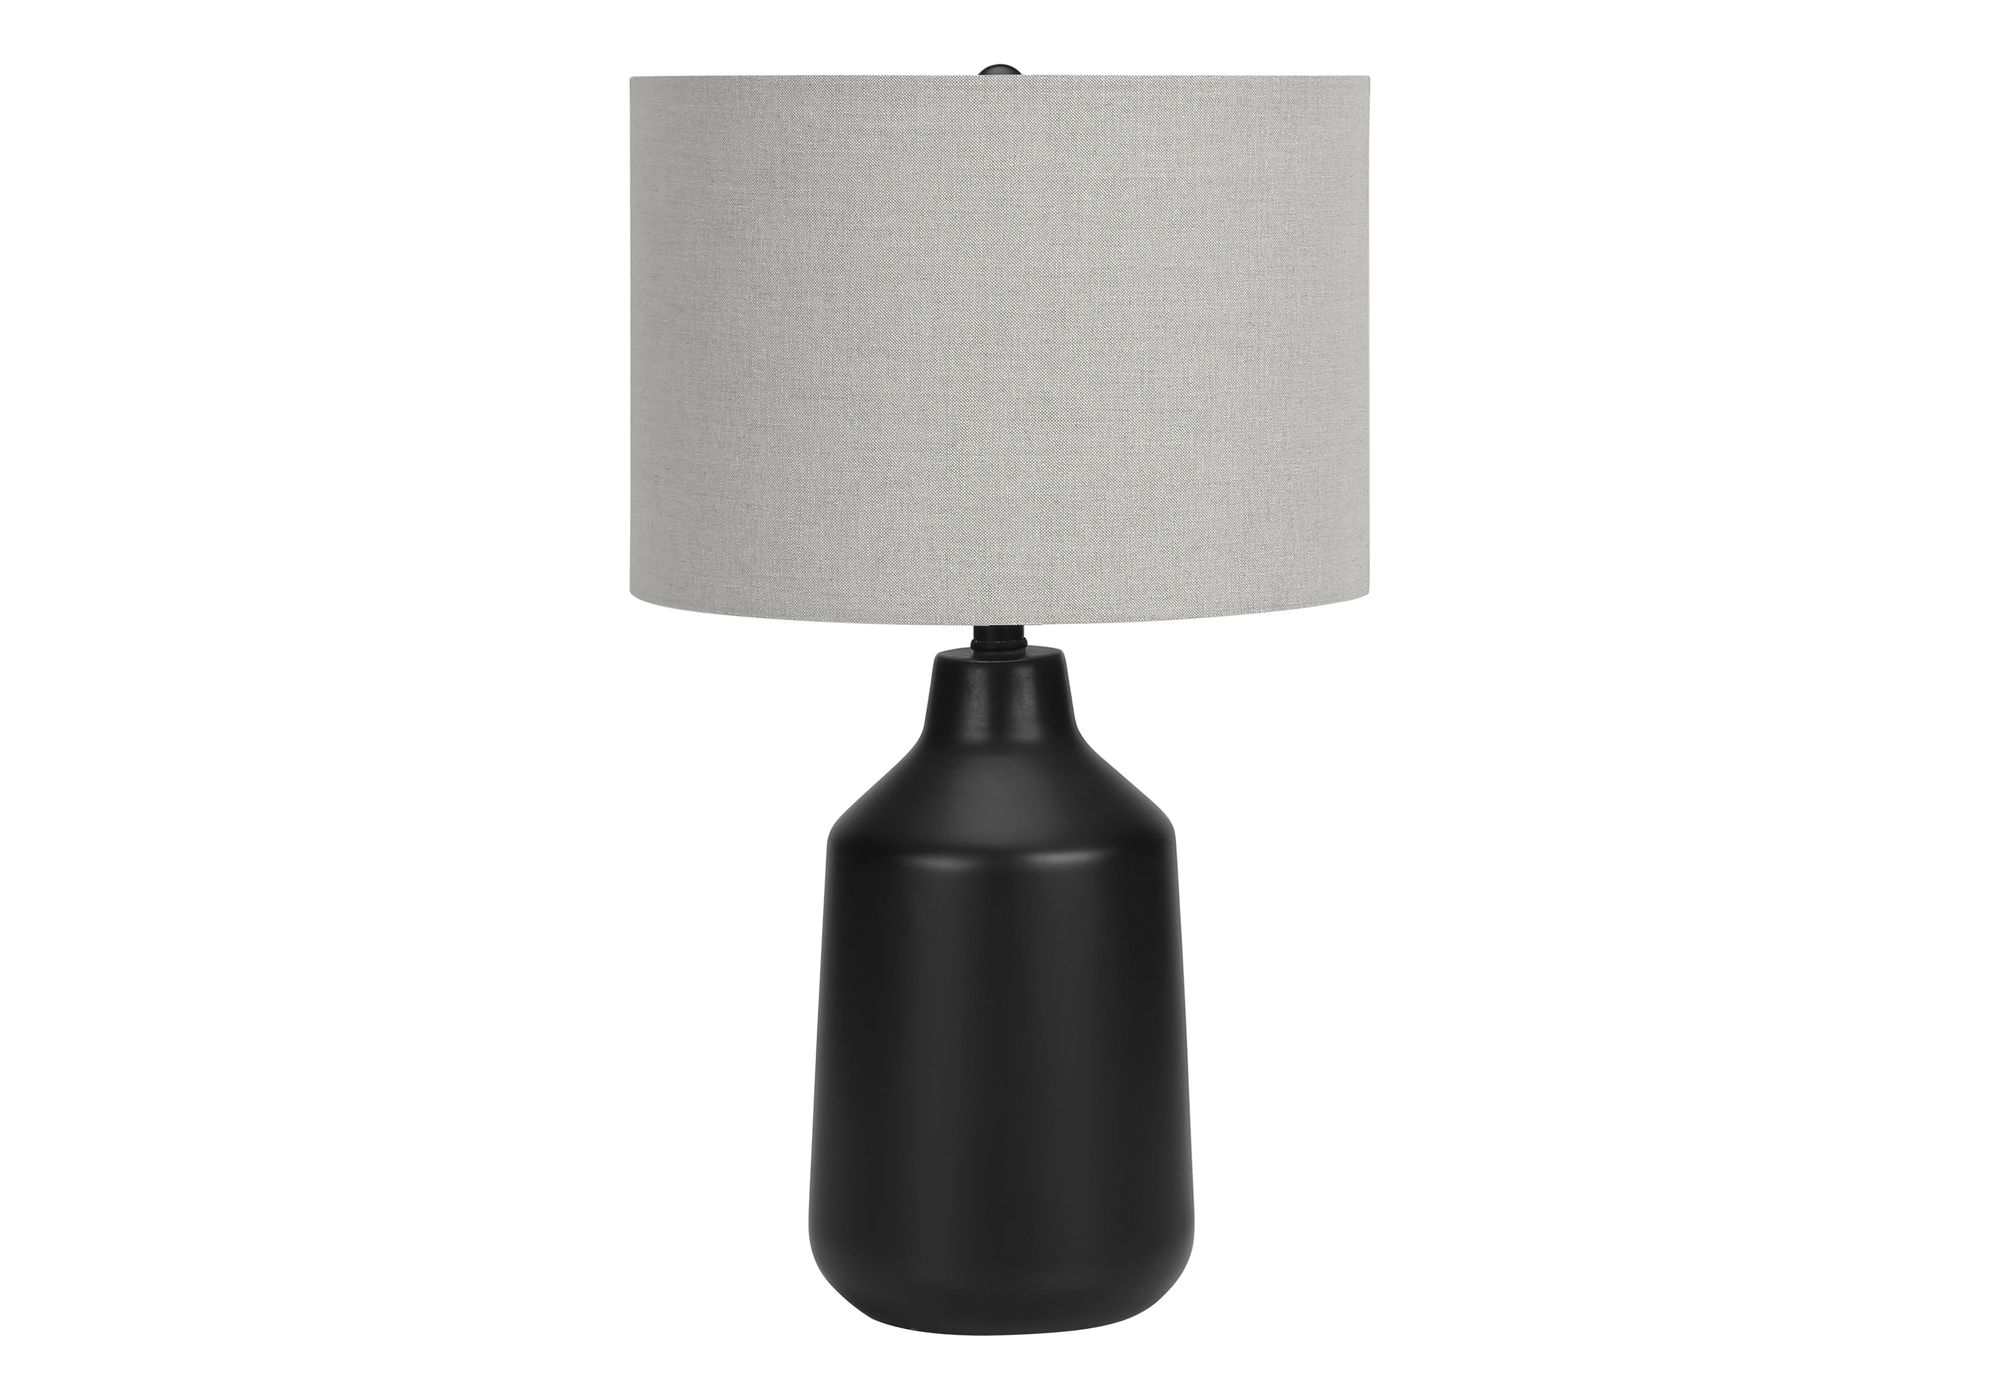 LIGHTING - 24"H TABLE LAMP BLACK CONCRETE / GREY SHADE